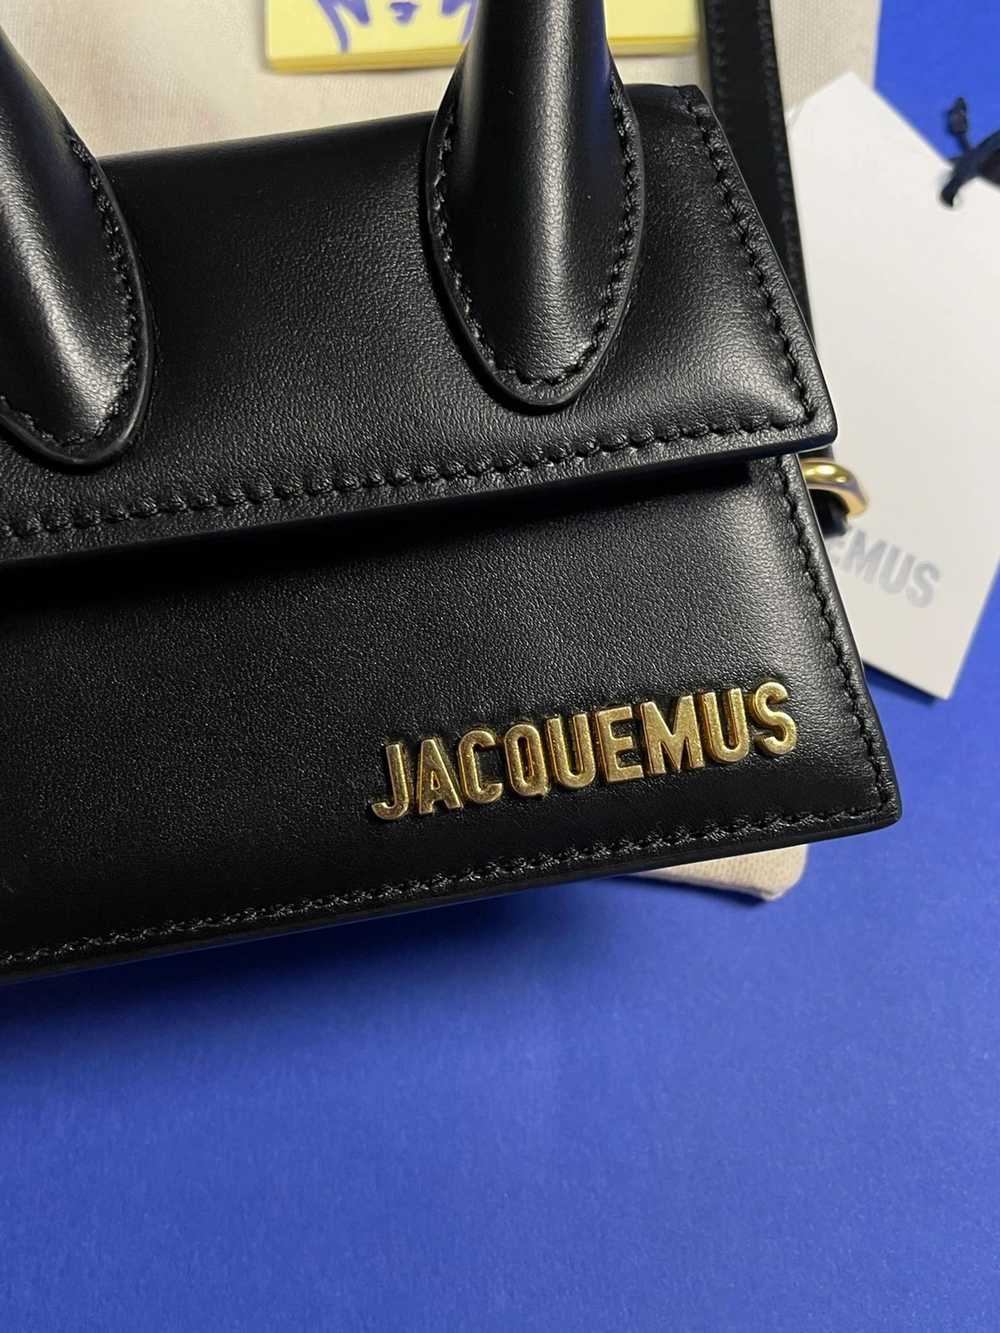 Jacquemus Jacquemus Le Chiquito Black Leather Bag - image 4